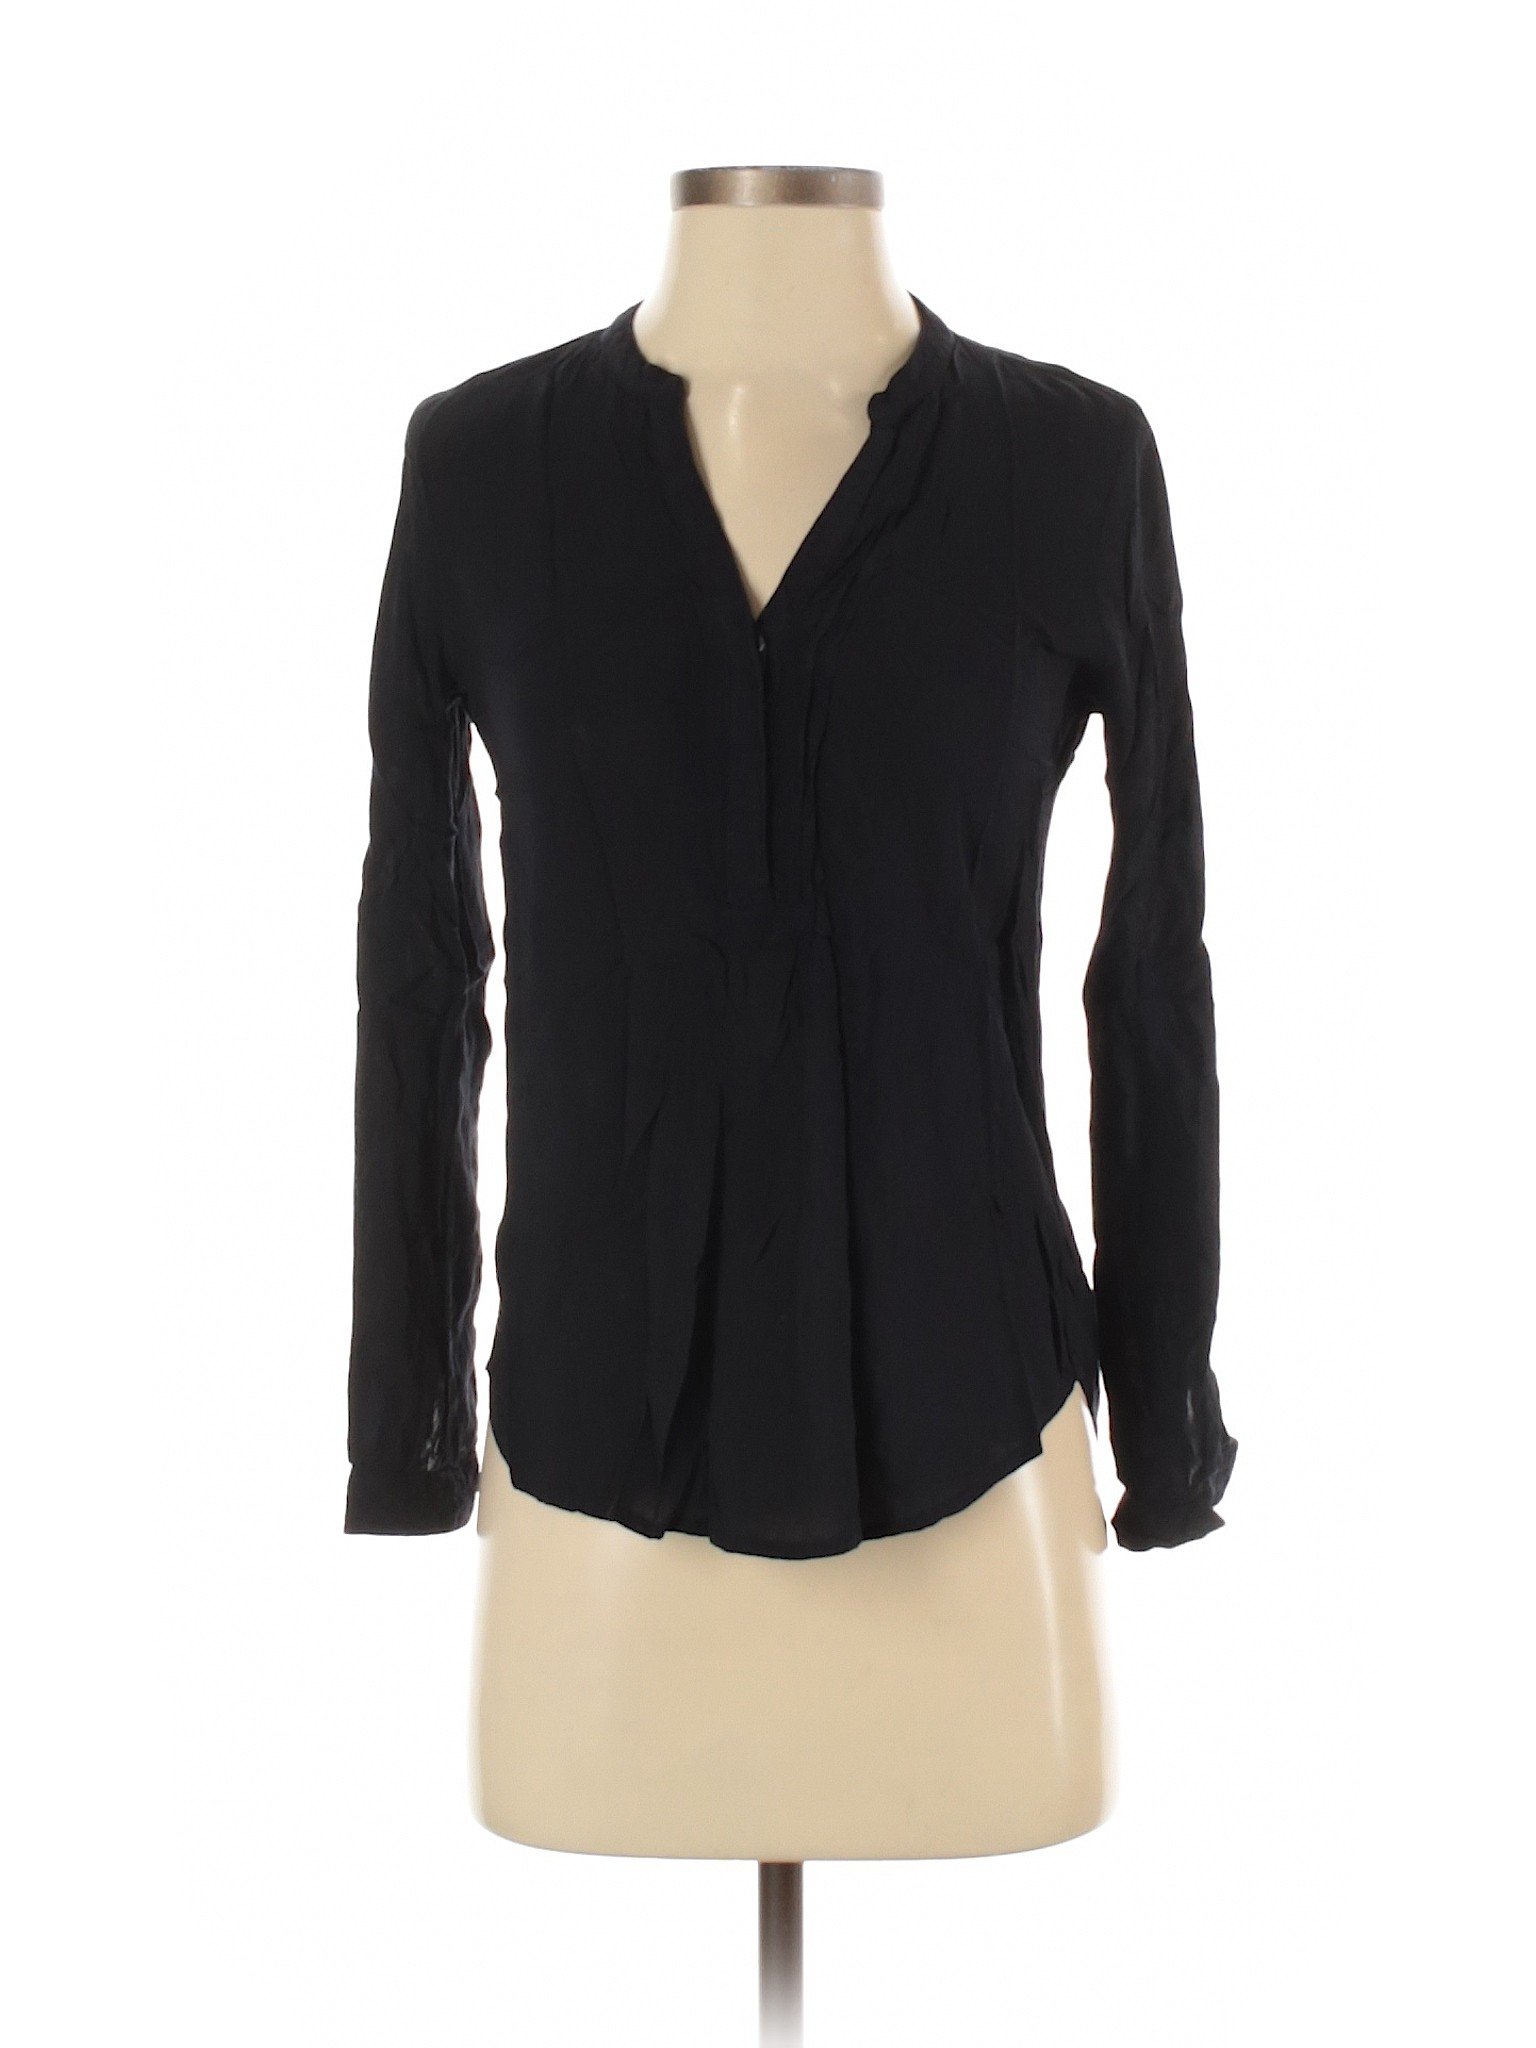 Old Navy Women Black Long Sleeve Blouse XS | eBay